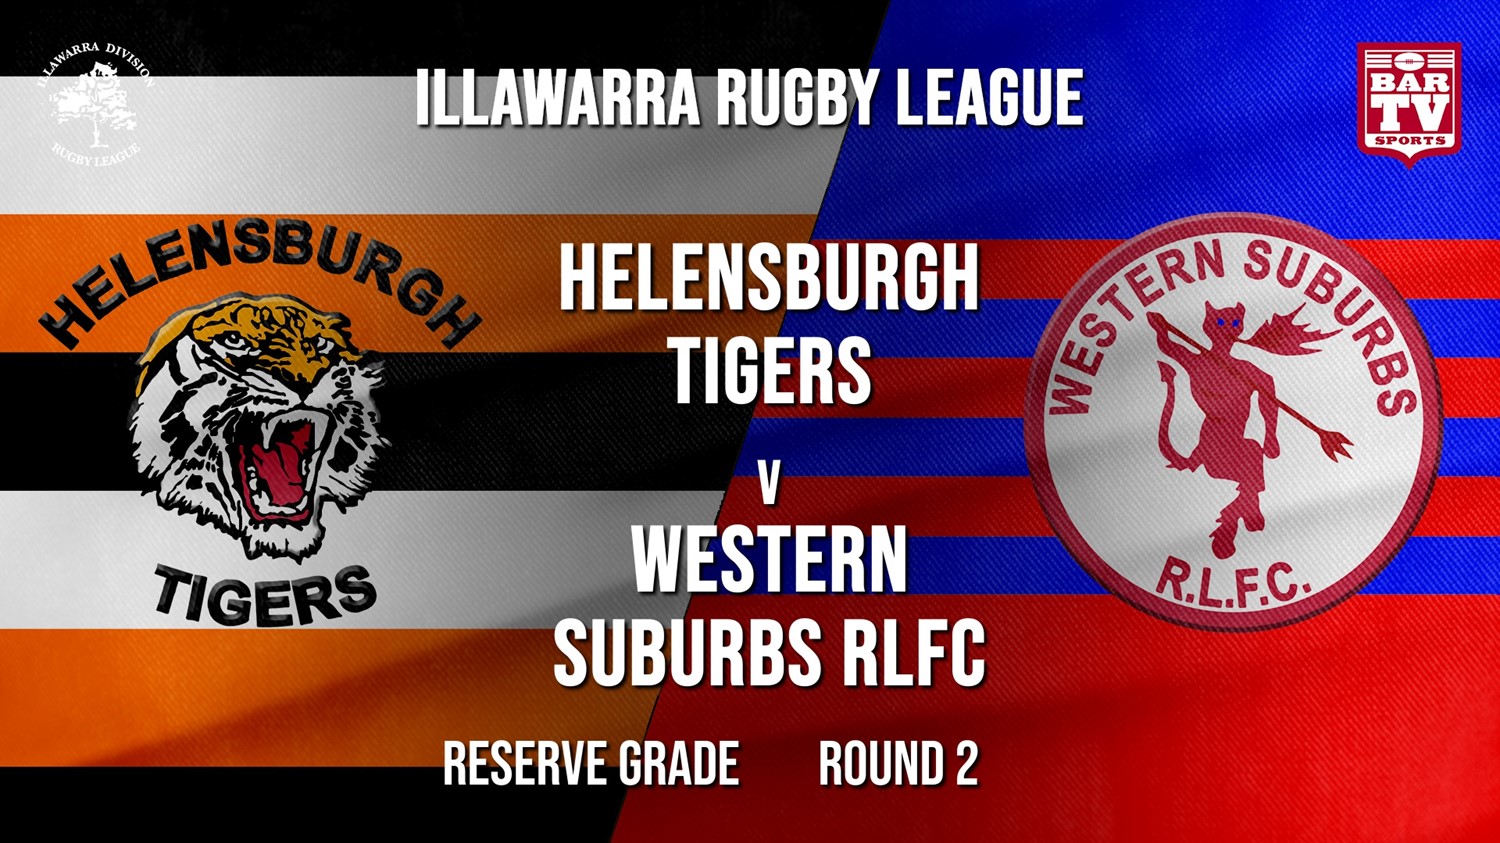 IRL Round 2 - Reserve Grade - Helensburgh Tigers v Western Suburbs RLFC Minigame Slate Image